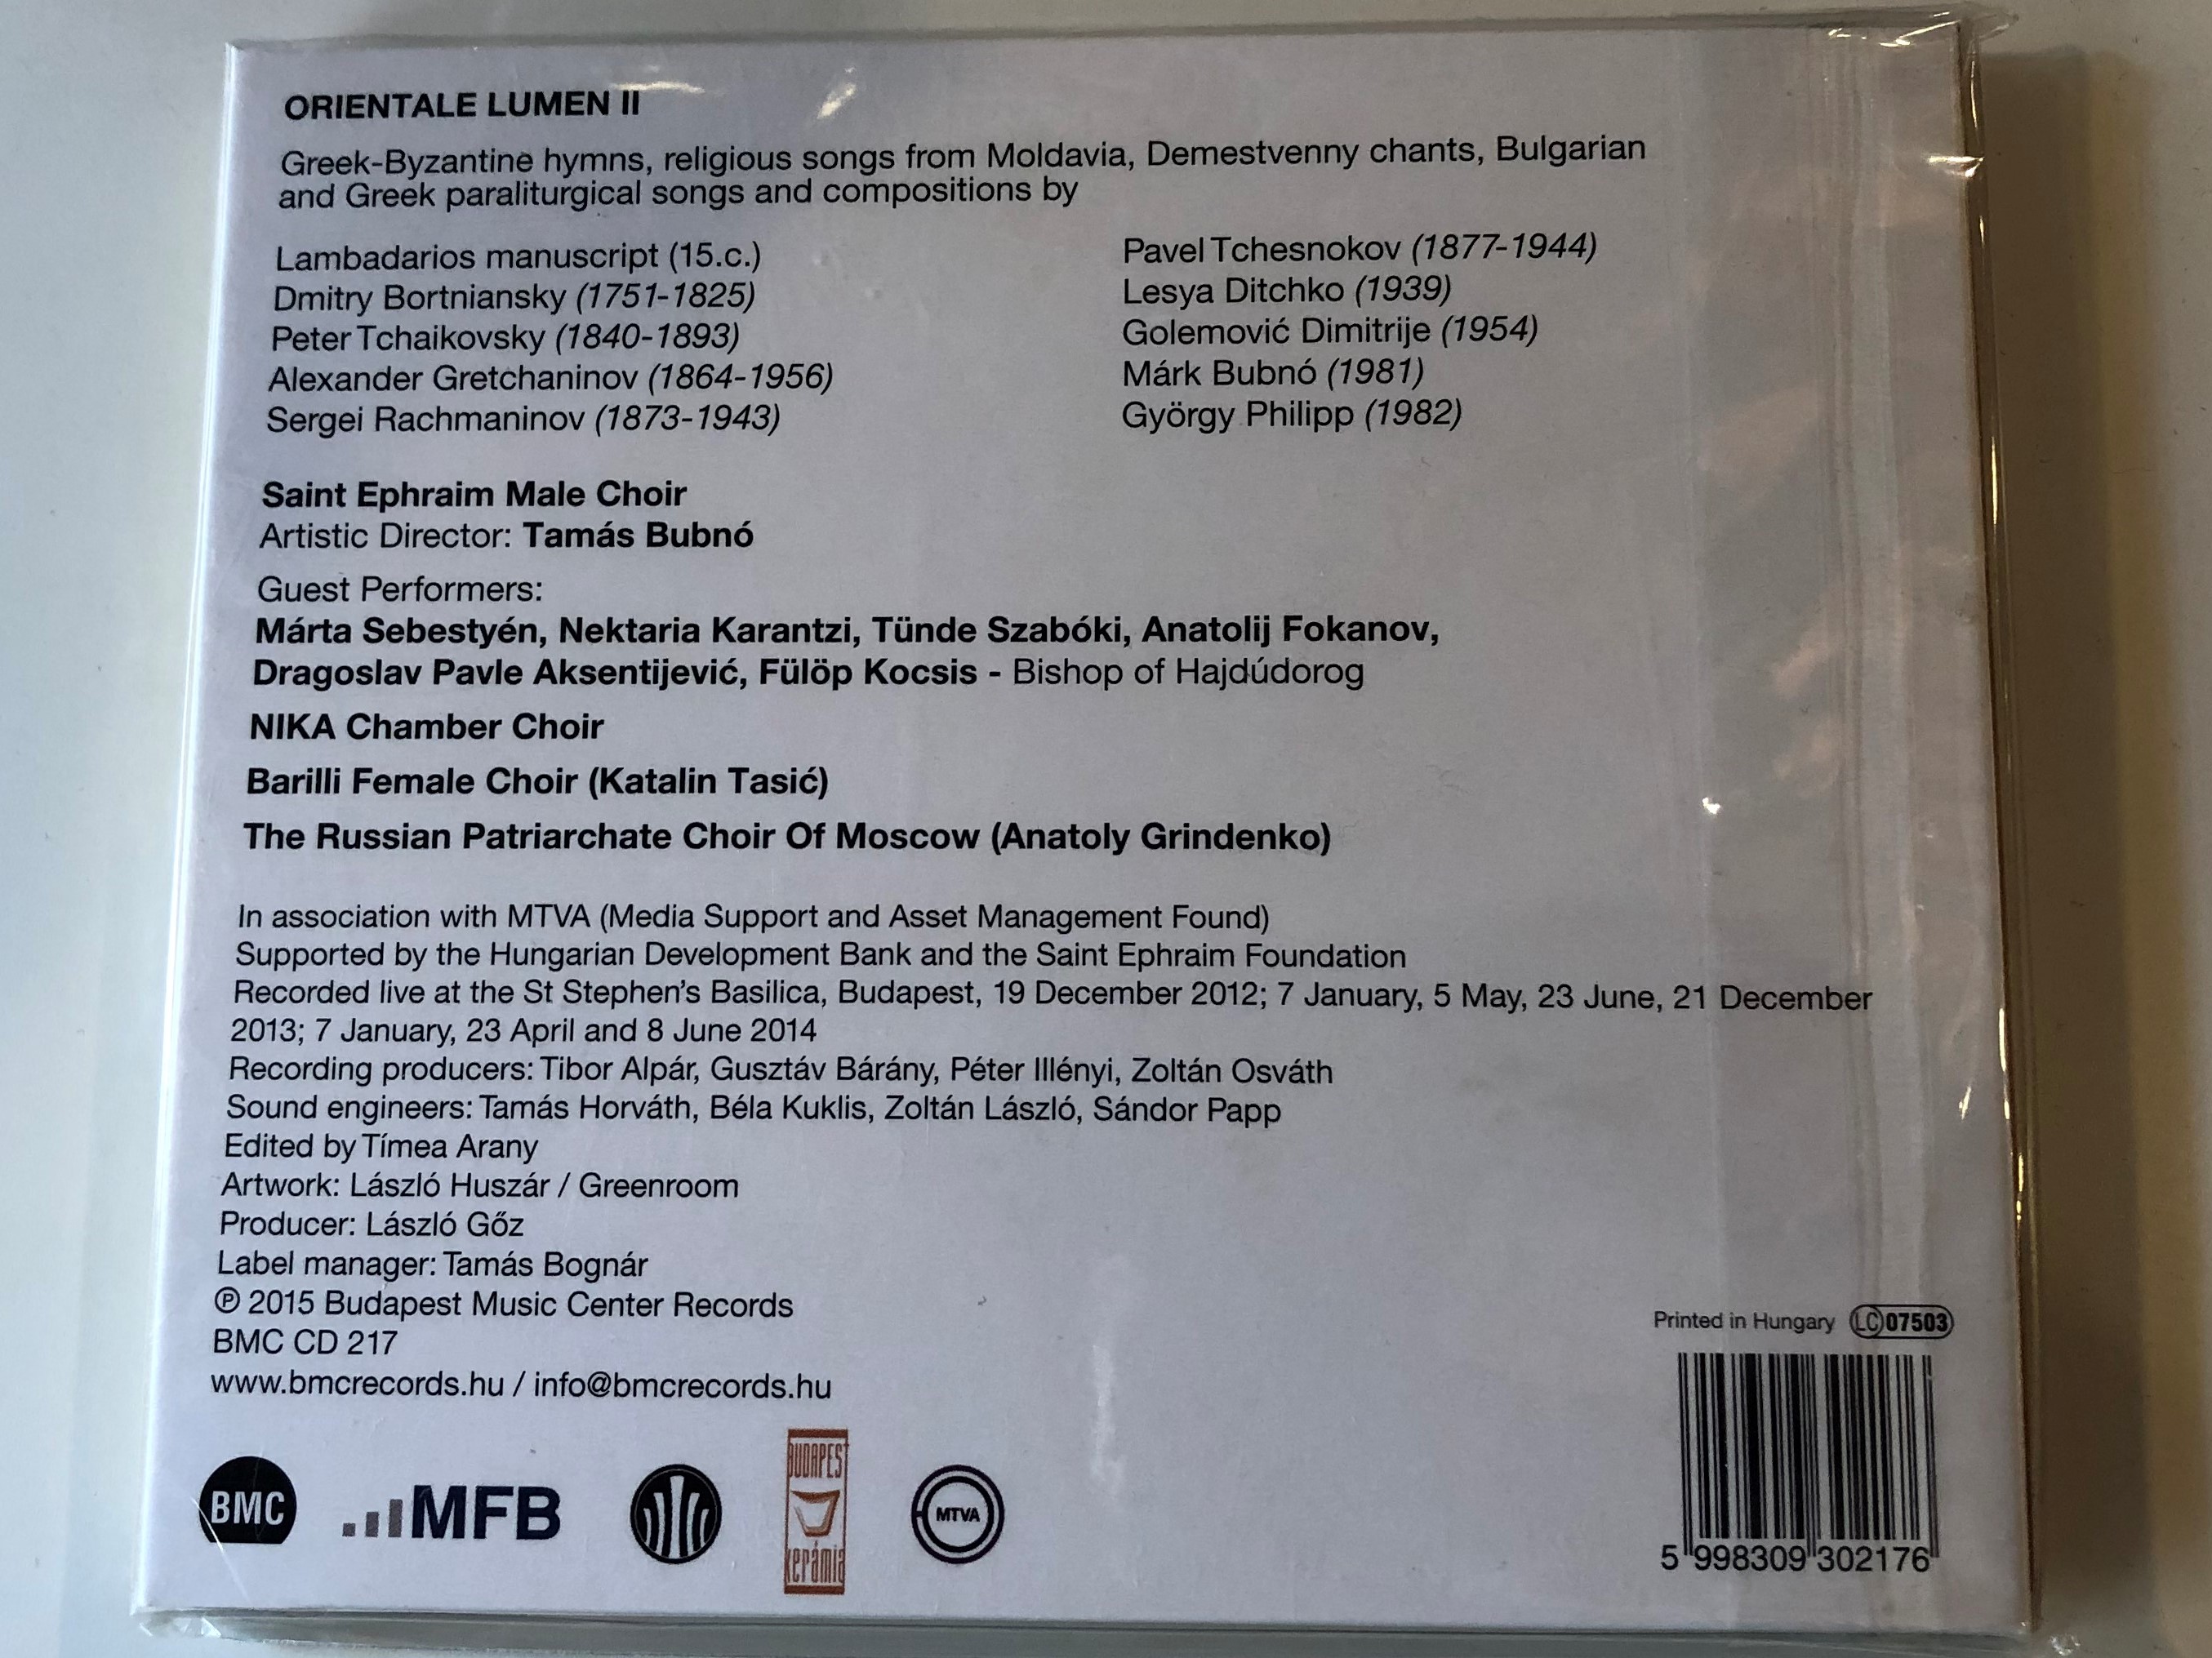 orientale-lumen-ii-saint-ephraim-male-choir-budapest-music-center-records-2x-audio-cd-2015-bmc-cd-217-2-.jpg